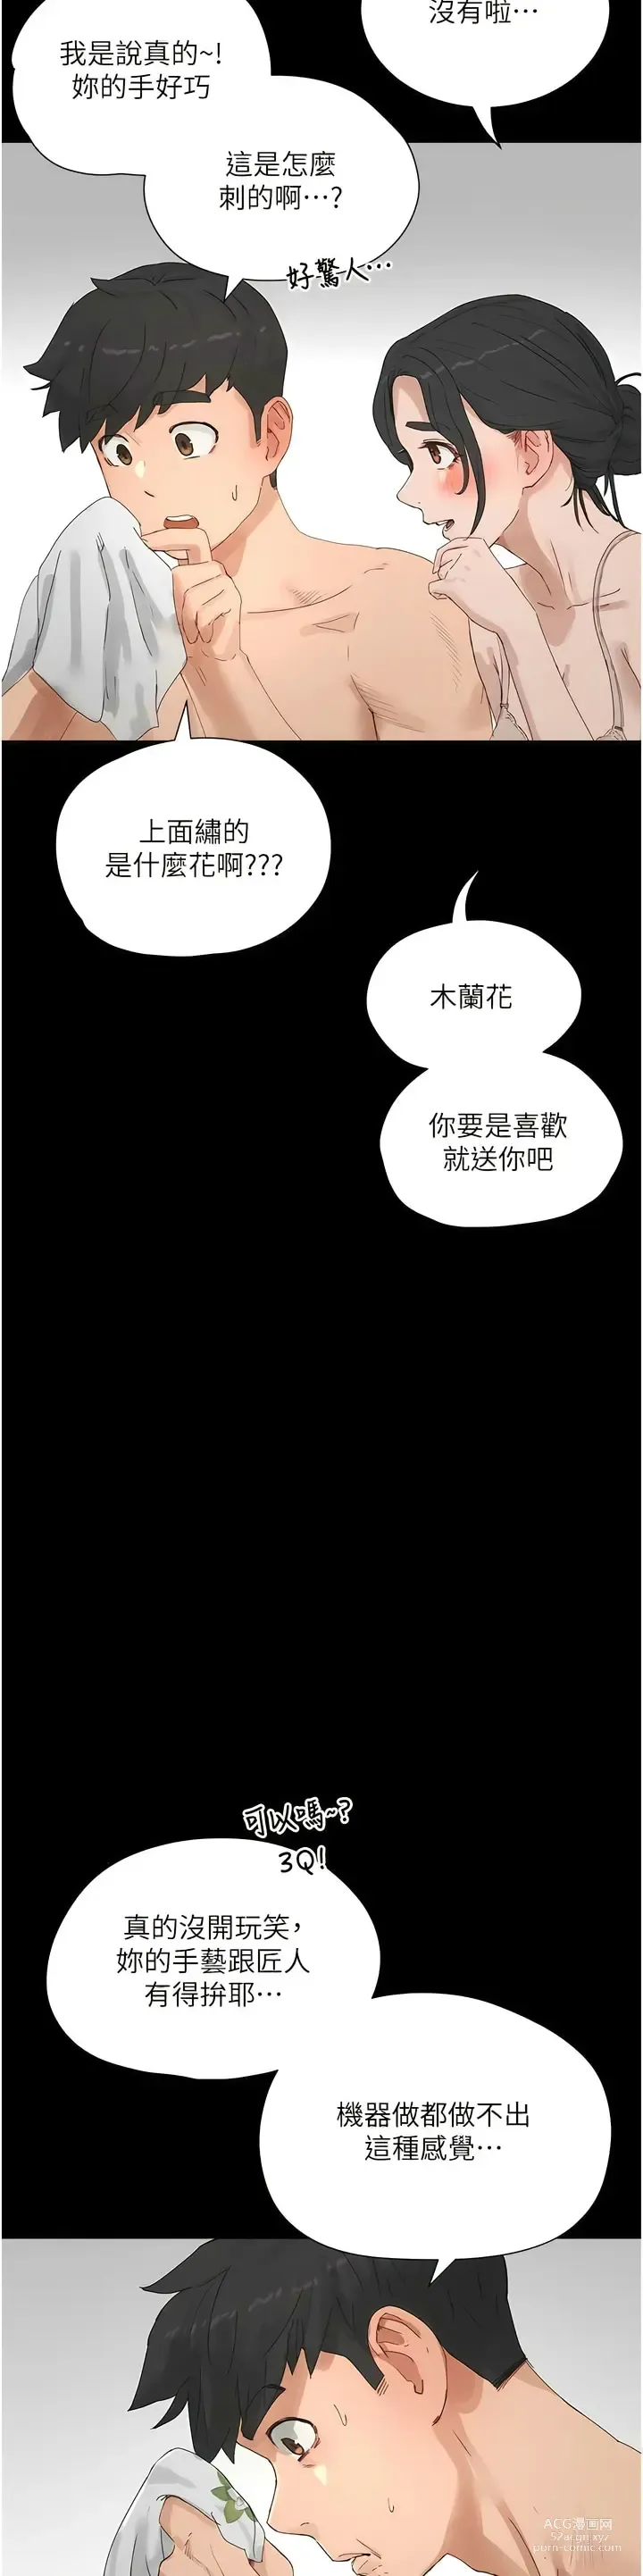 Page 923 of manga 夏日深处/Summer of Love 61-86